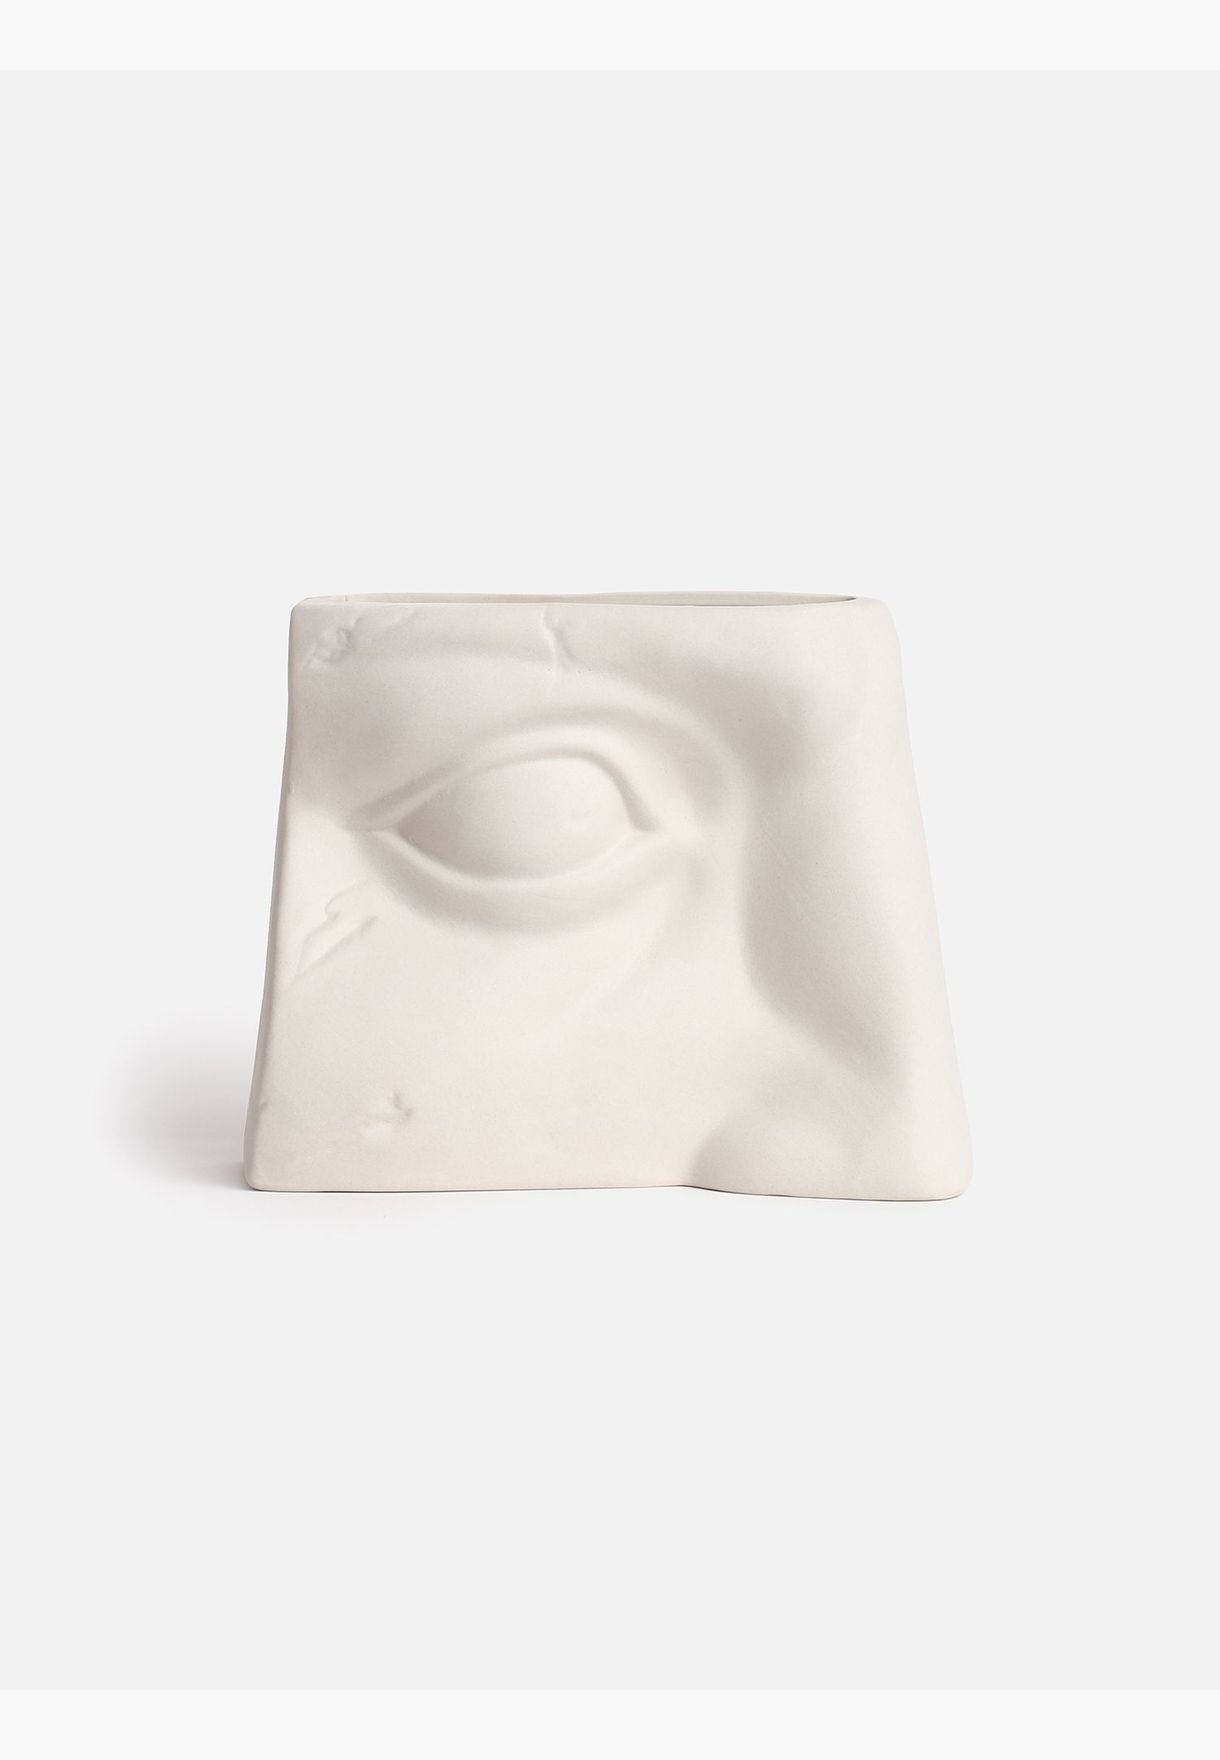 Eye Shaped Minimalistic Modern Ceramic Vase For Home Decor